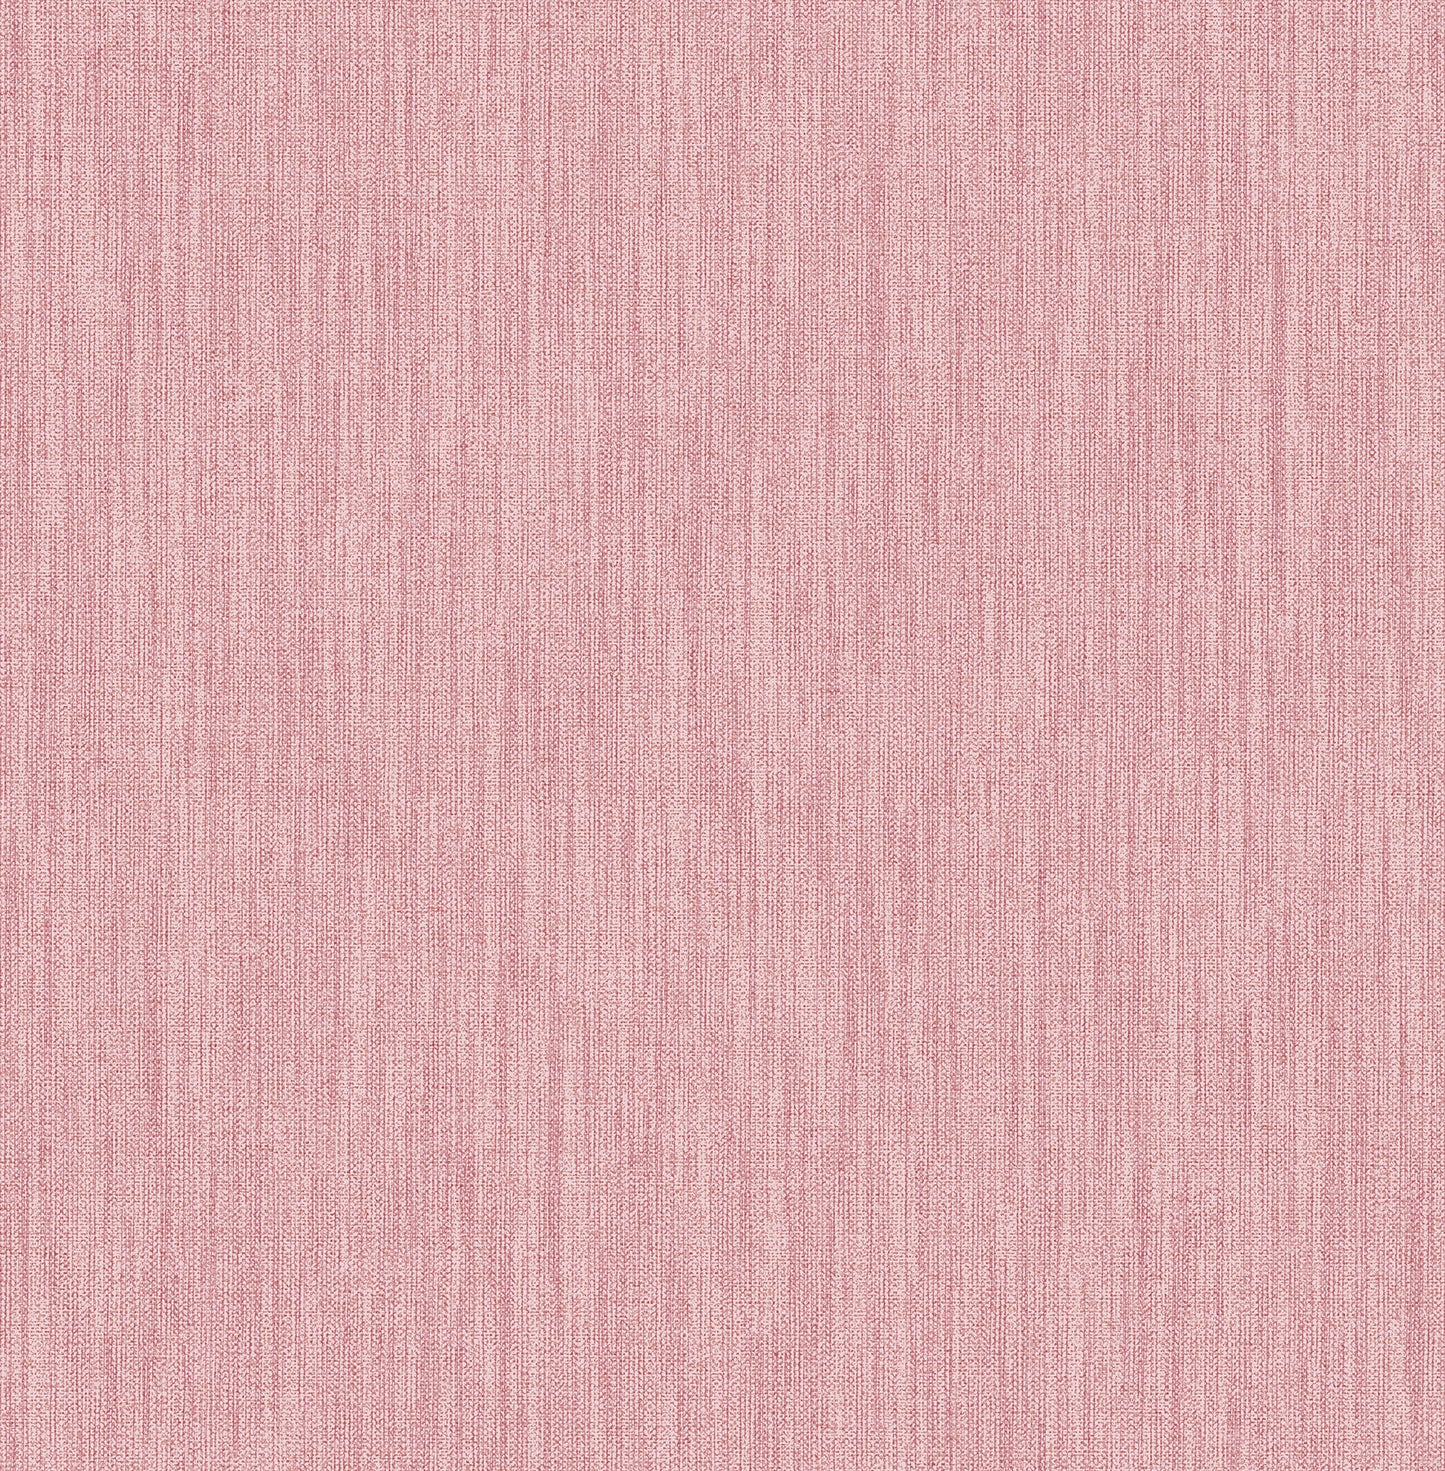 View 2861-25290 Equinox Chiniile Pink Faux Linen Pink A-Street Prints Wallpaper